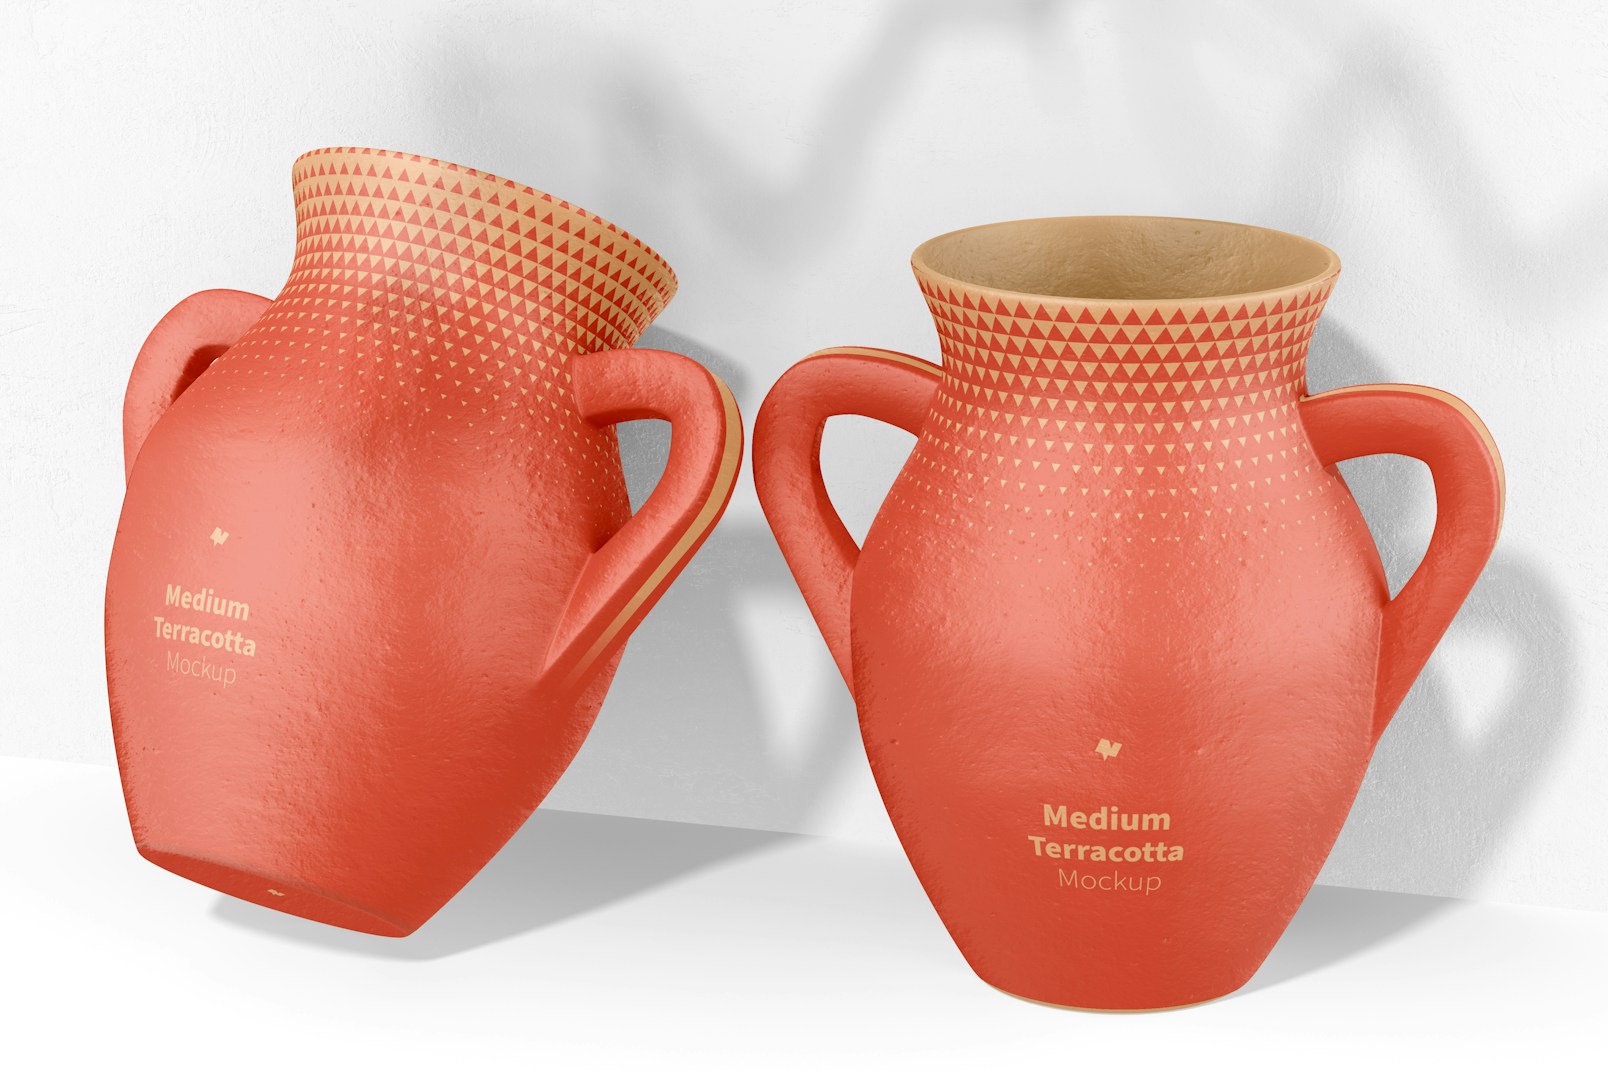 Medium Terracotta Vases with Handles Mockup, Leaned